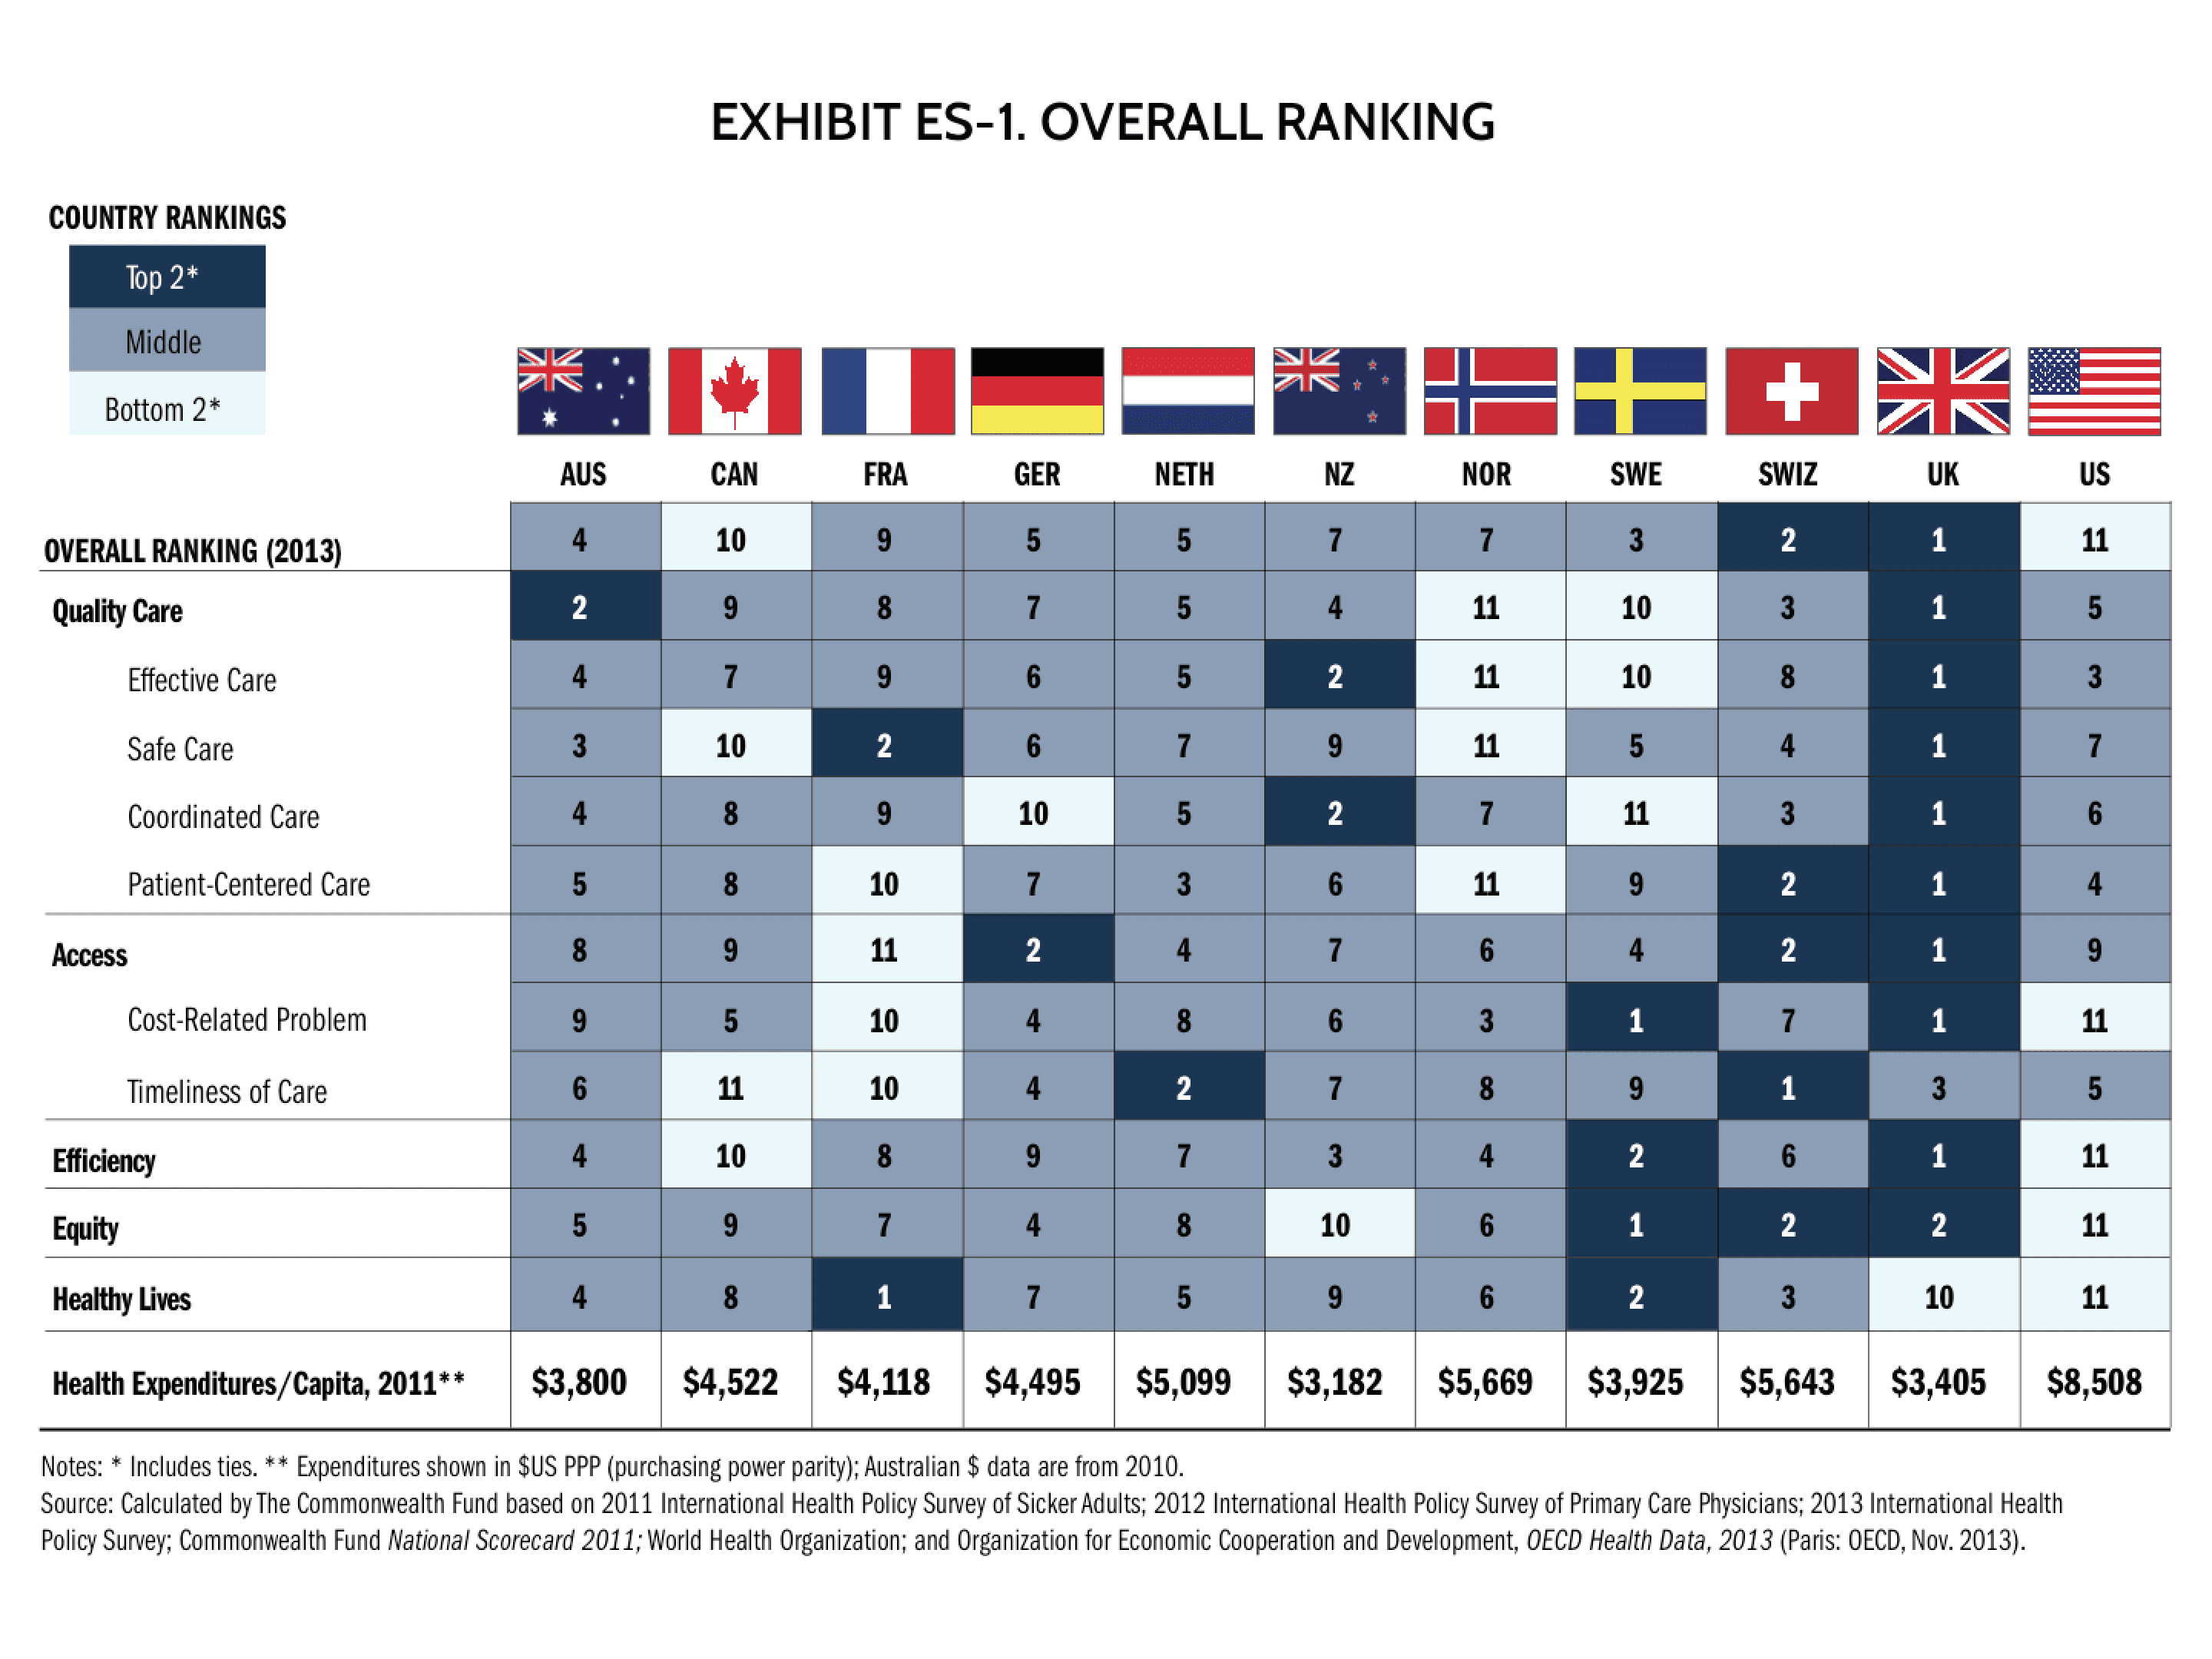 https://www.internationalinsurance.com/wp-content/uploads/2018/05/ranking-11-best-international-healthcare-countries.png